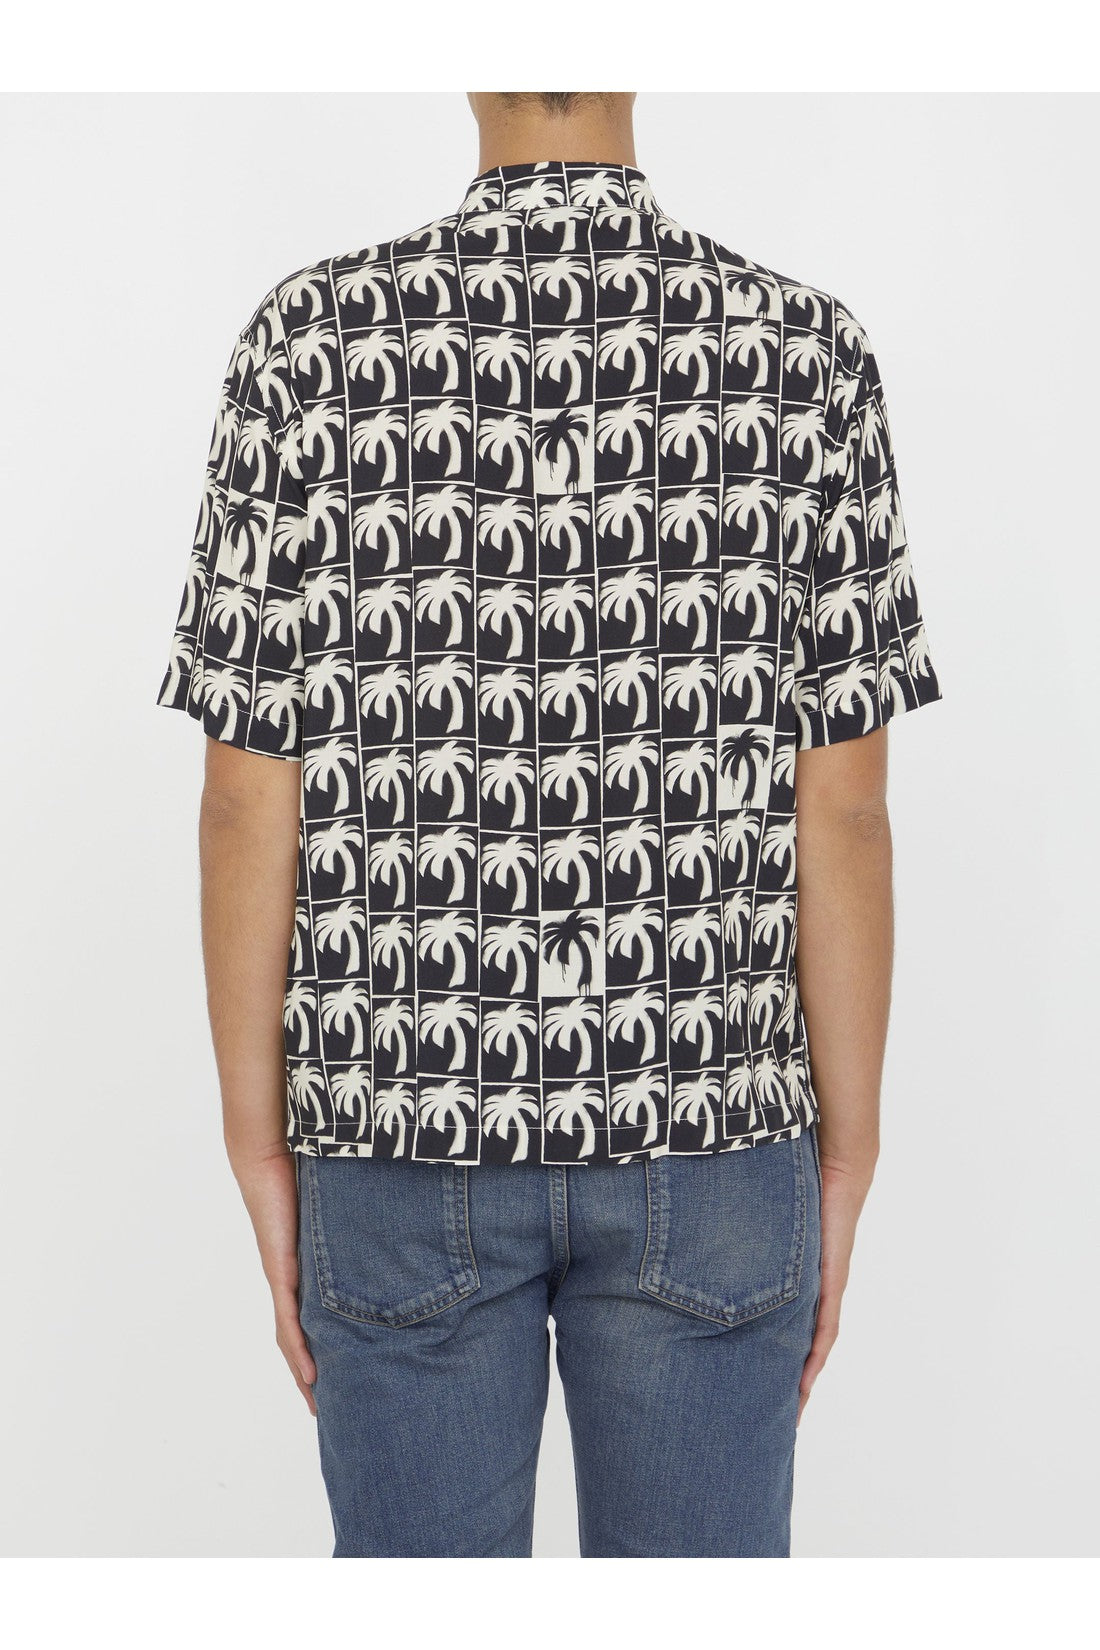 Palms print shirt